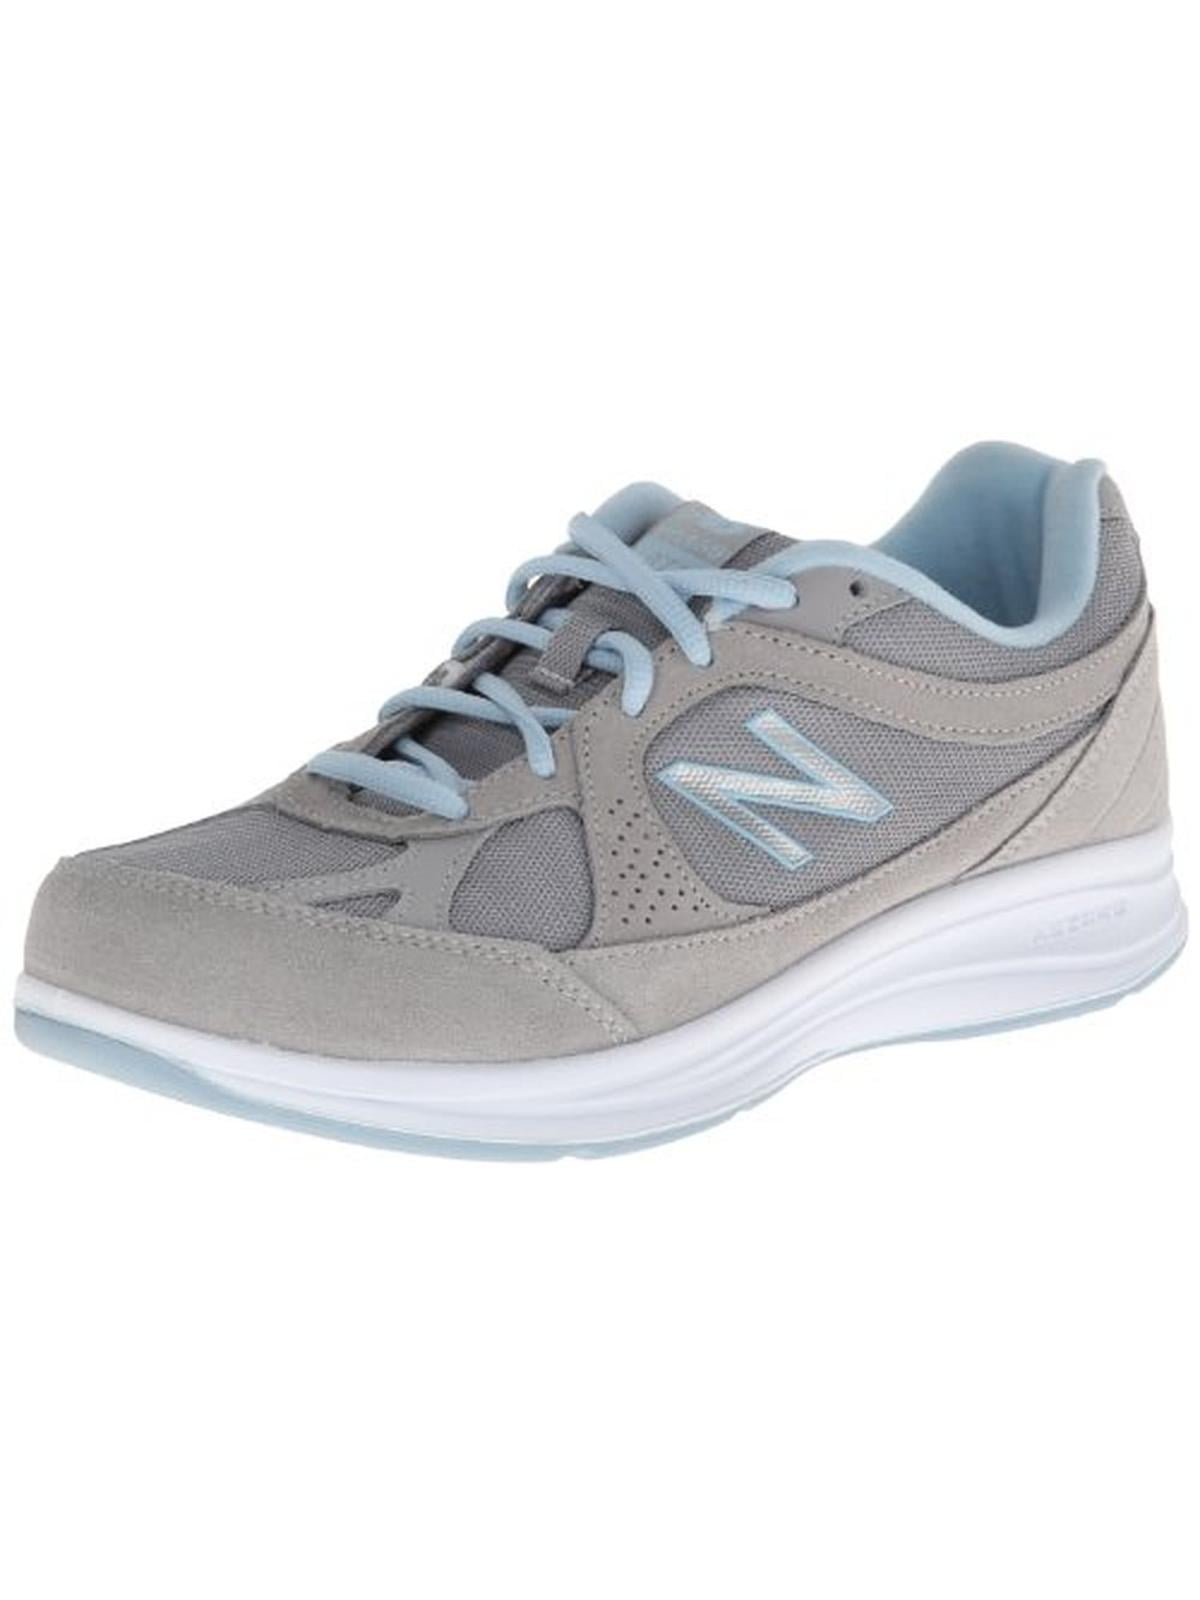 New Balance - New Balance Womens 877 Mesh Comfort Walking Shoes ...